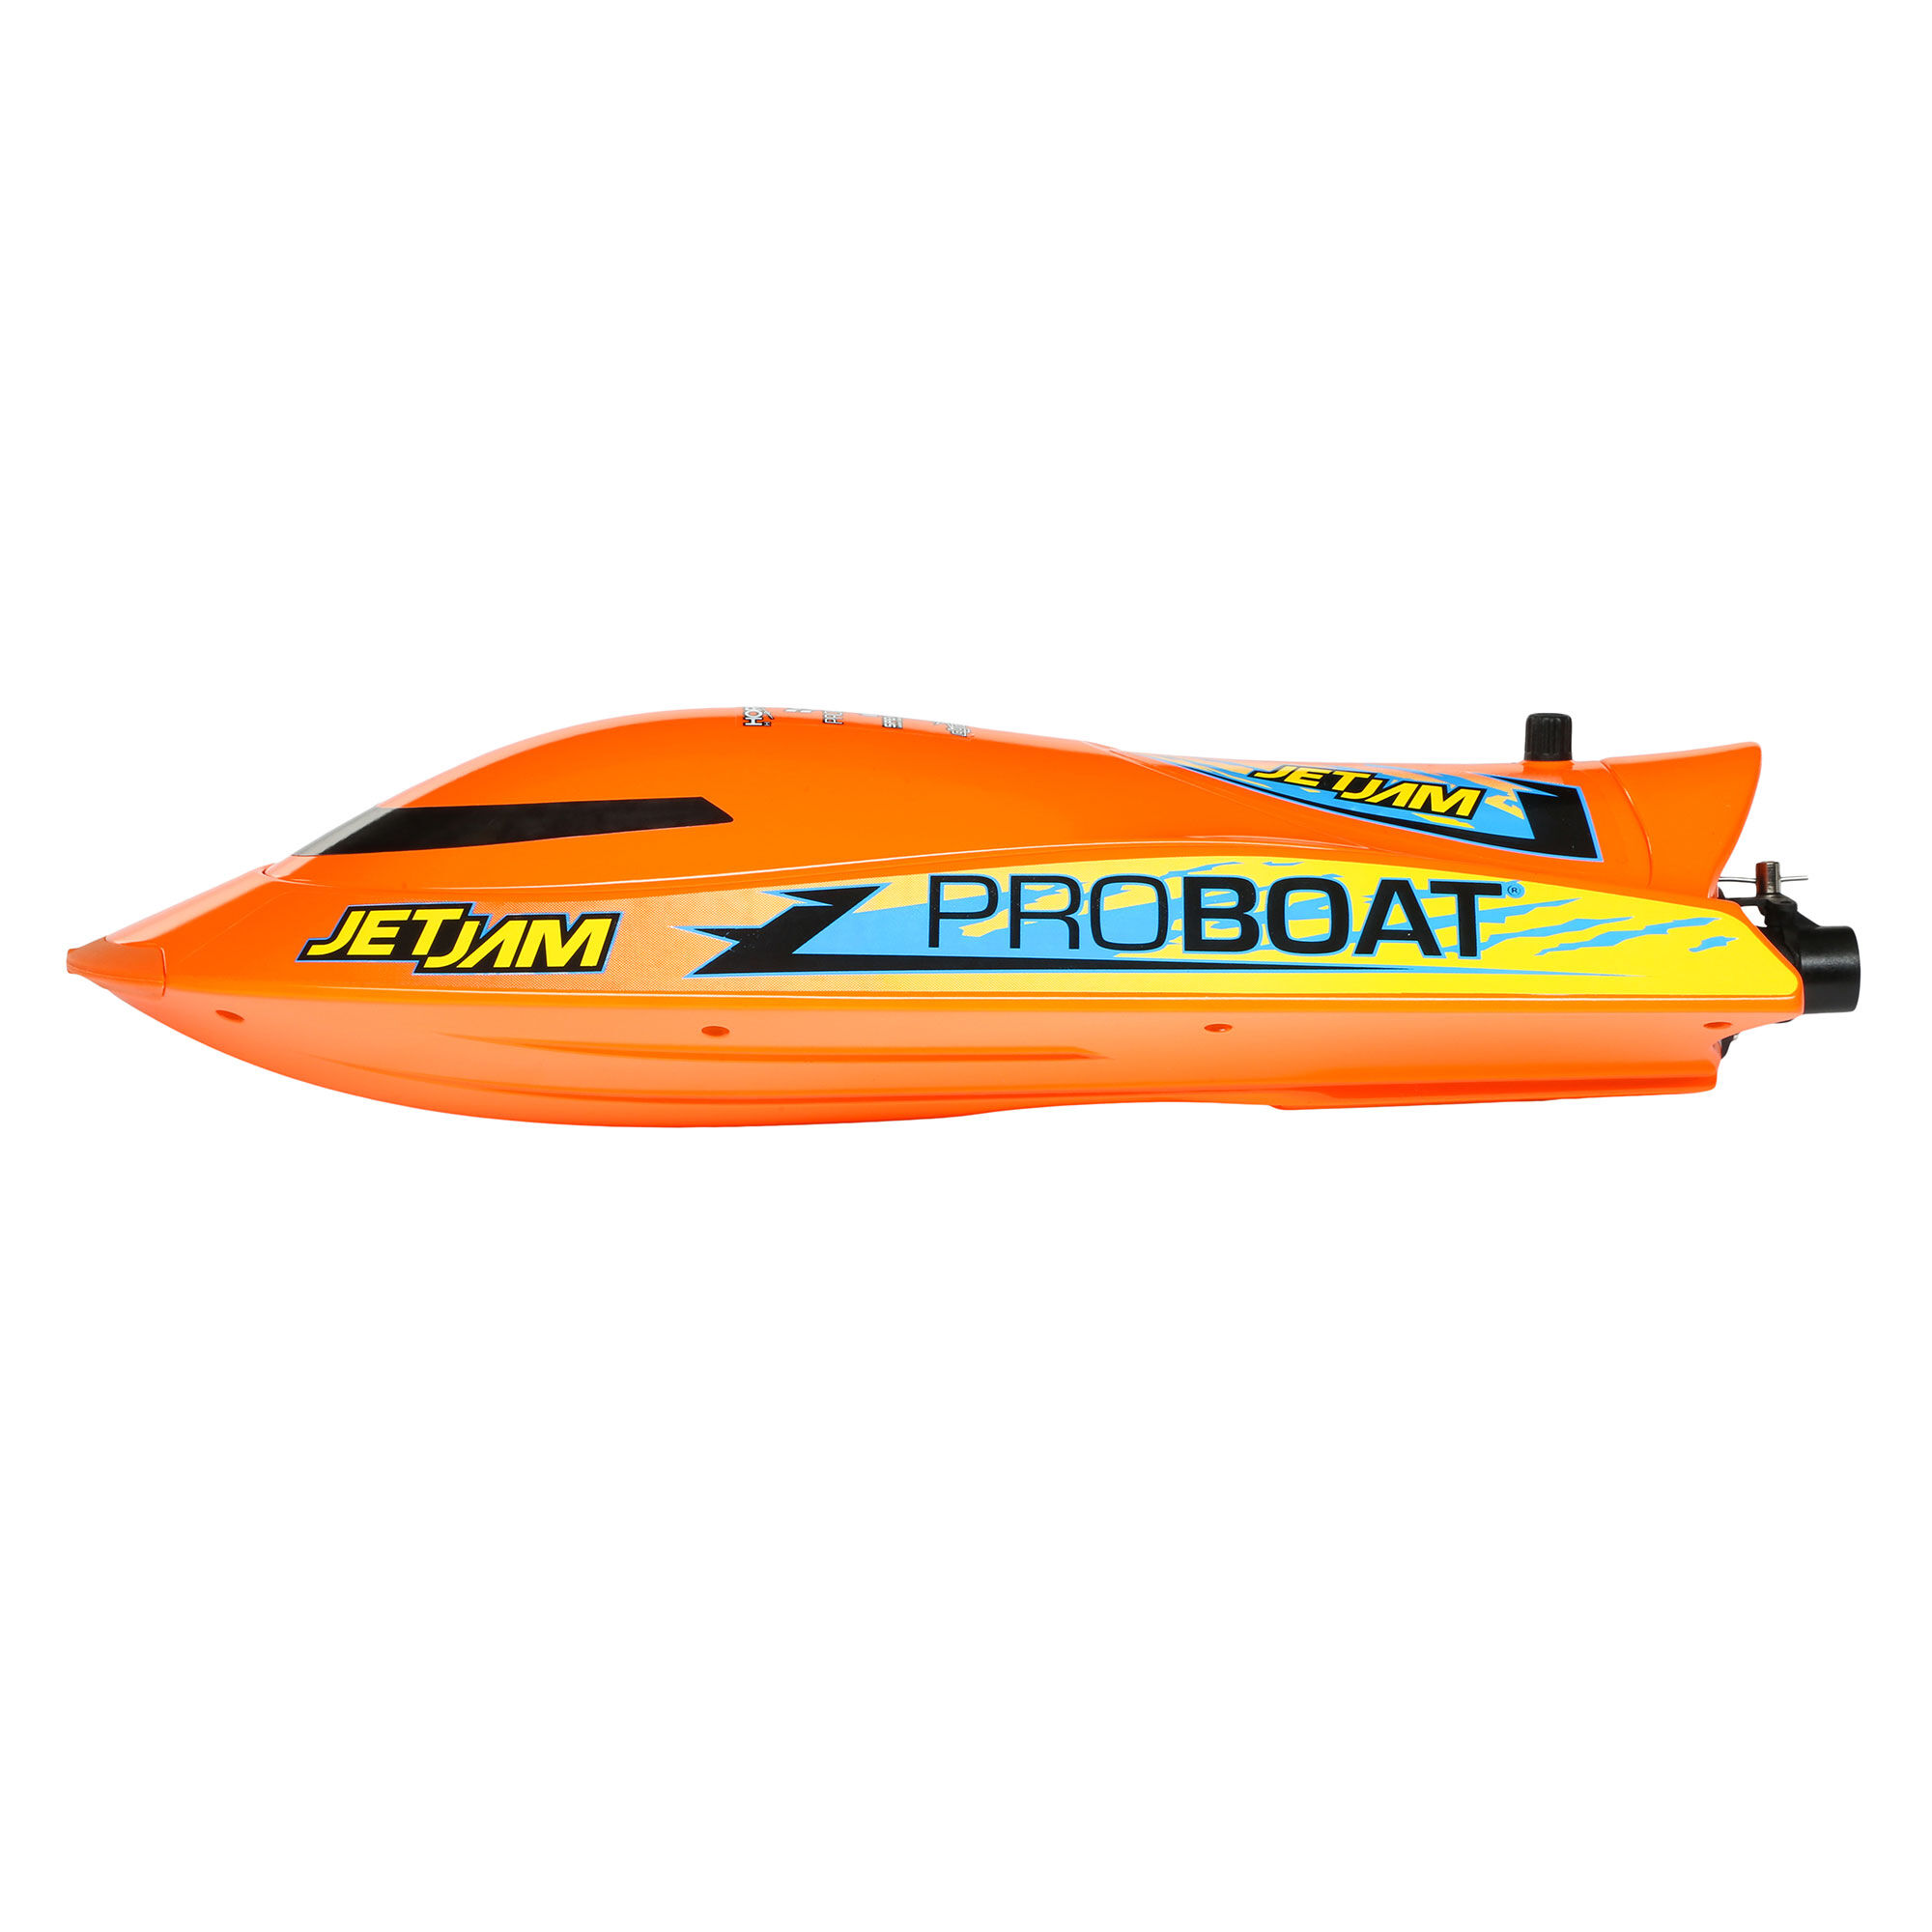 proboat jet boat recall